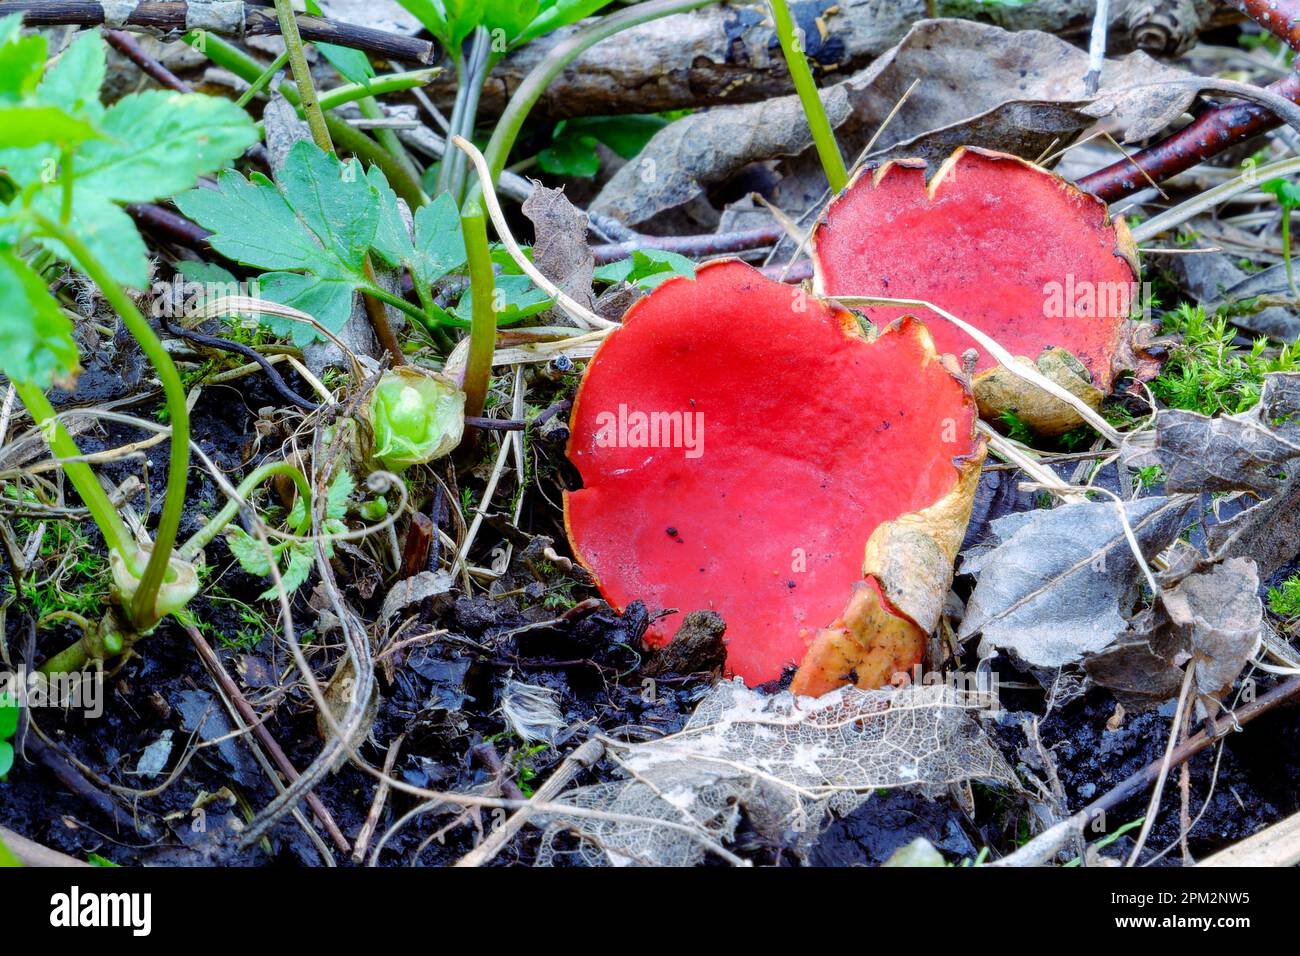 Scarlatto Elf Cup funghi. Fungo commestibile di primavera - Sarcoscopypha austriaca o Sarcoscopypha coccinea. Foto Stock